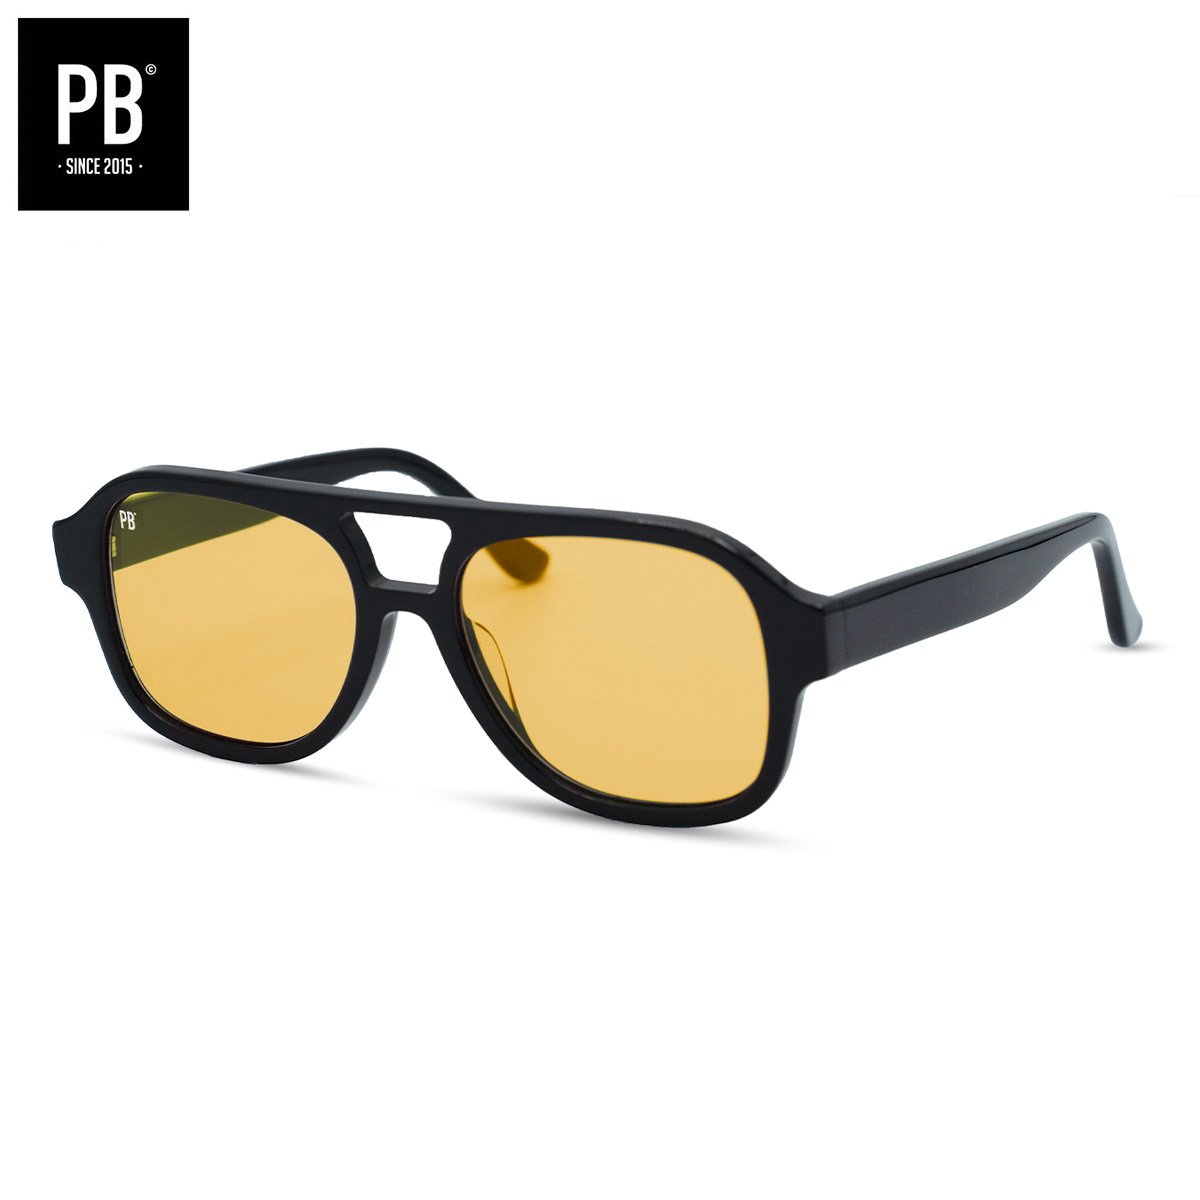 PB Sunglasses - Blanca Acetate Yellow. - Zonnebril dames en heren - Retro - Acetaat frame - Gele lenzen - Festival style